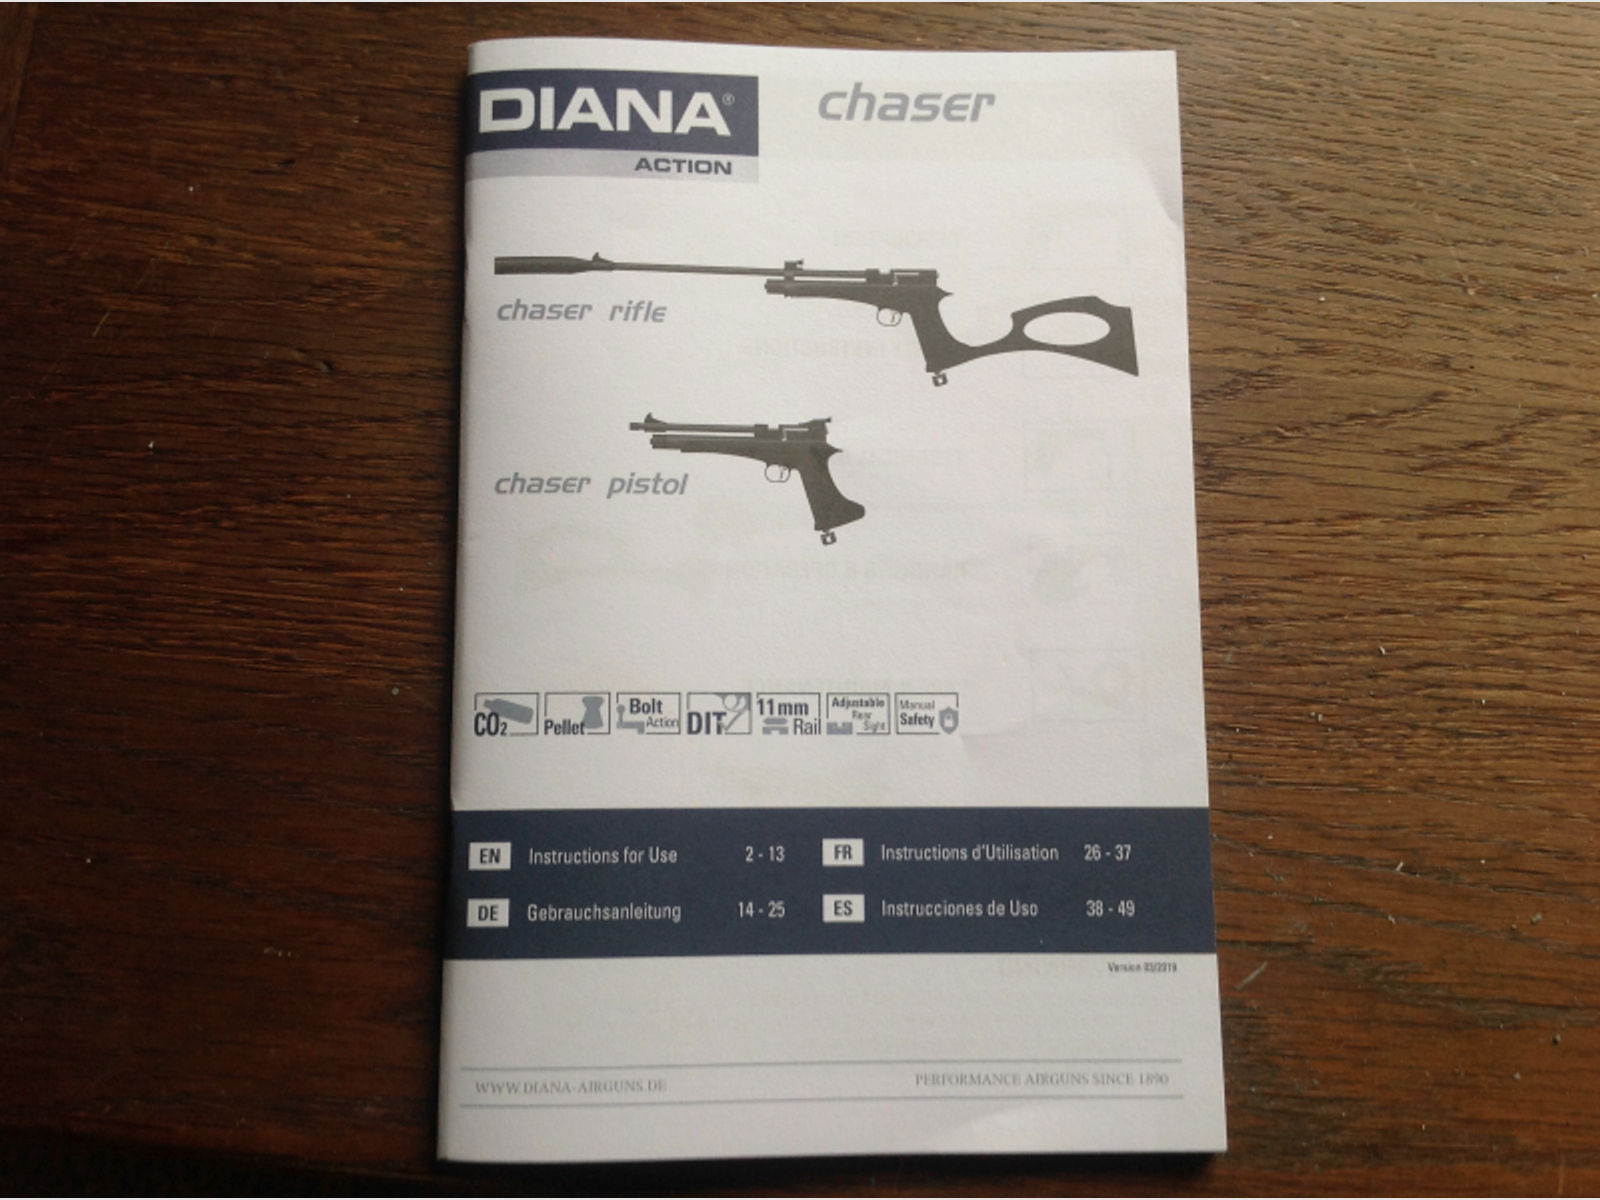 Diana Chaser/Bandit/Airbug Teile - Bedienungsanleitung - Teile